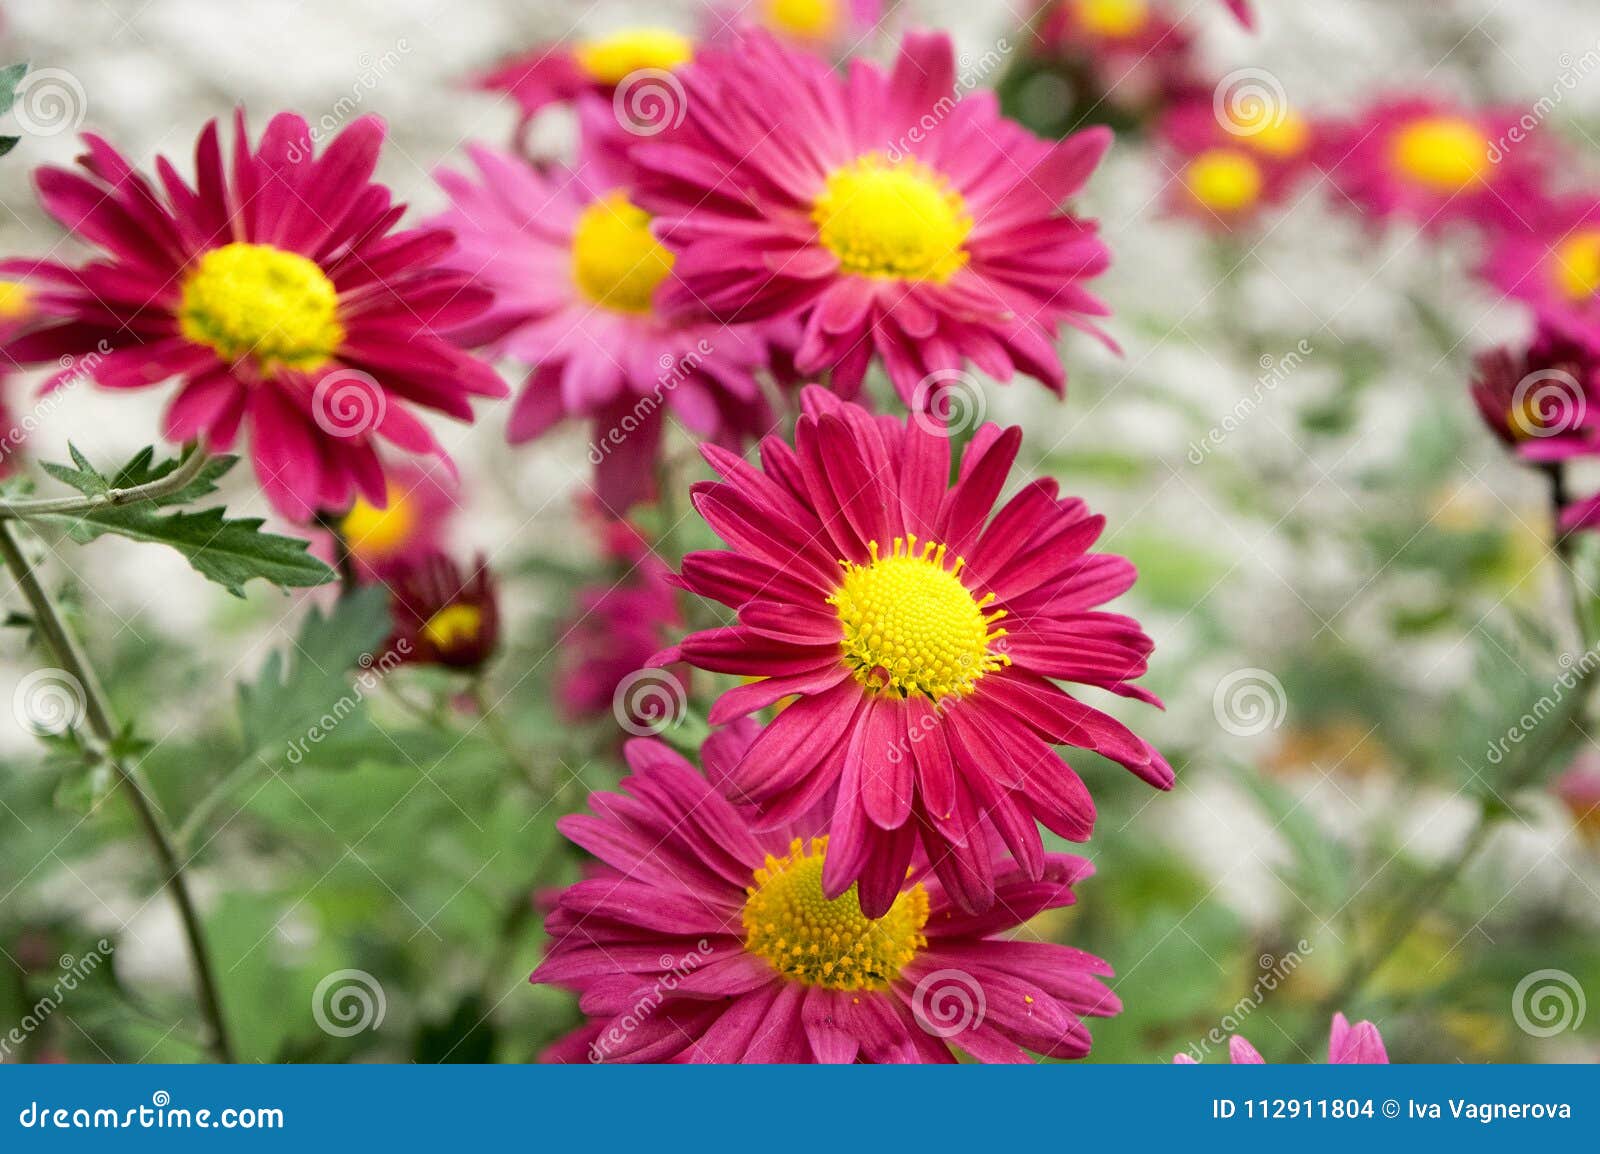 Chrysanthemum Indicum Mum Flowers In Bloom Stock Photo Image Of Daylight Autumn 112911804